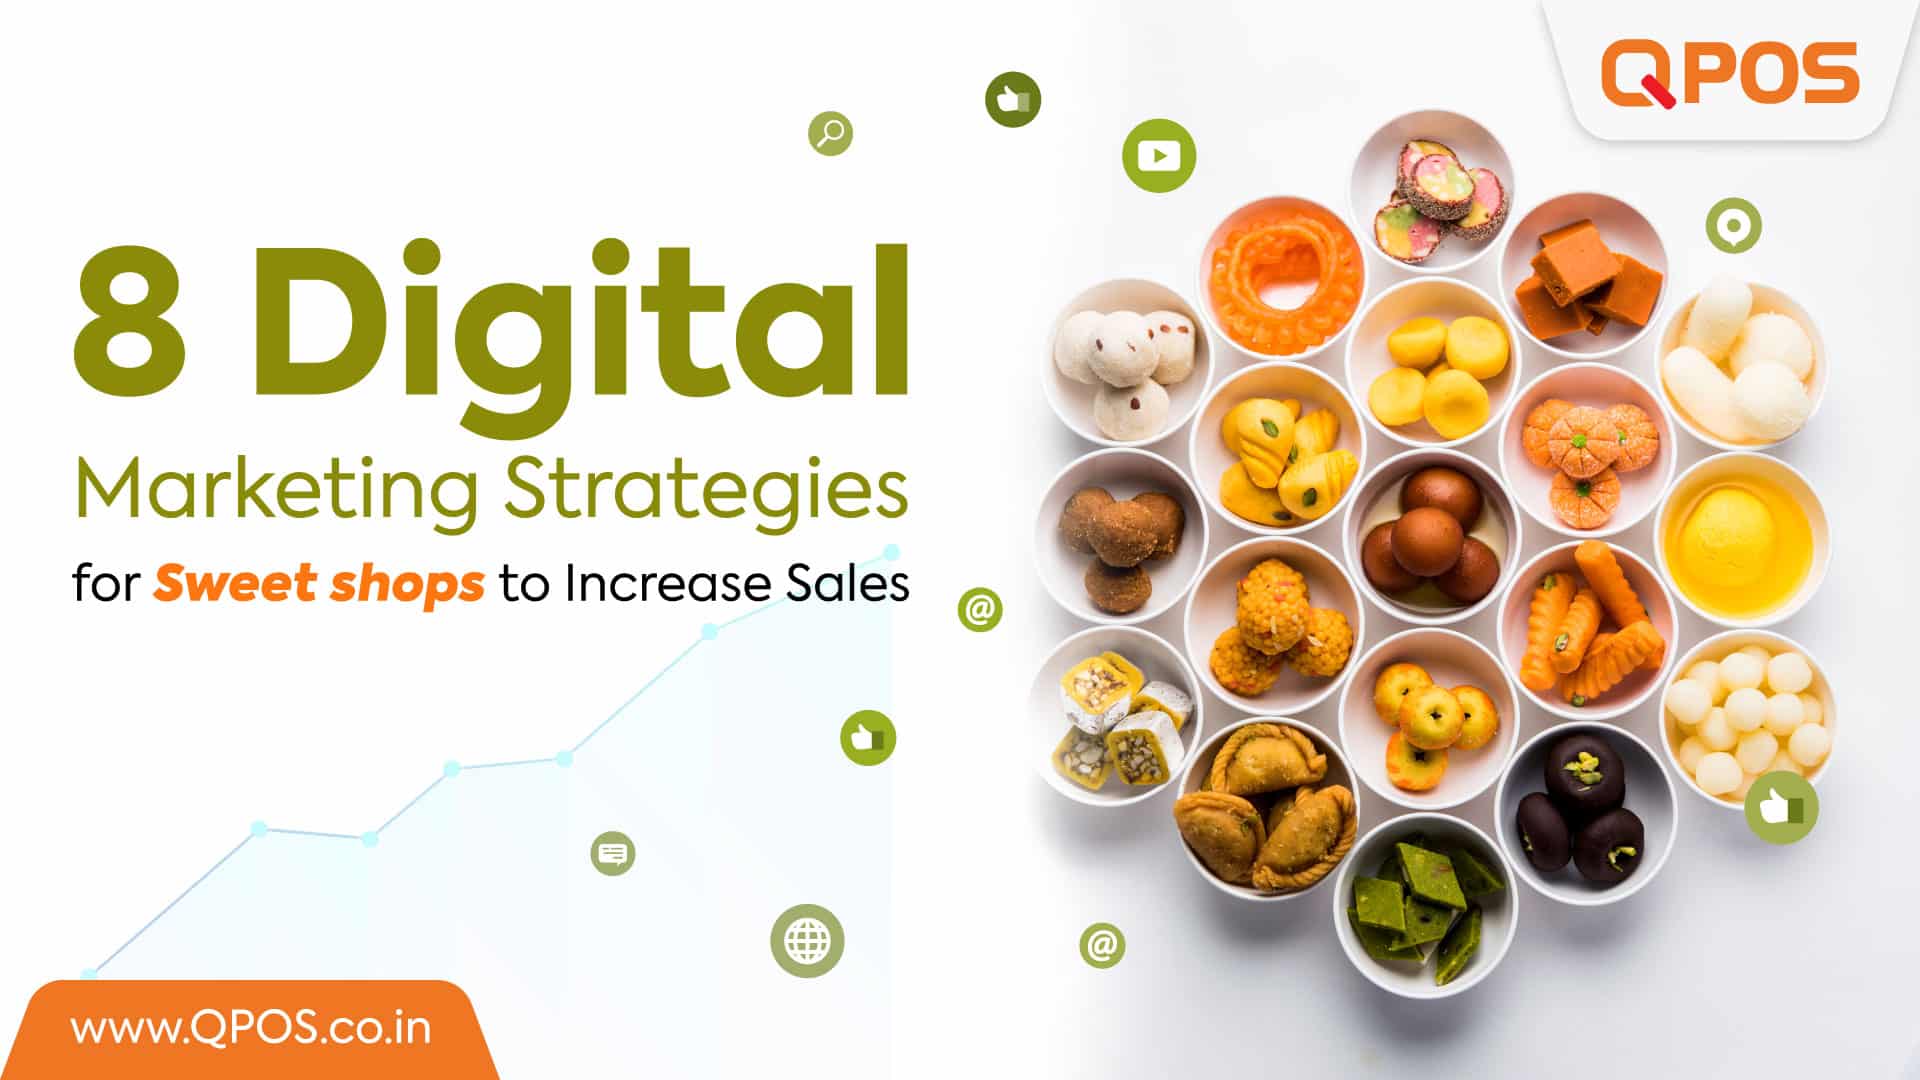 8 Digital Marketing Strategies for Sweet Shops to Increase Sales